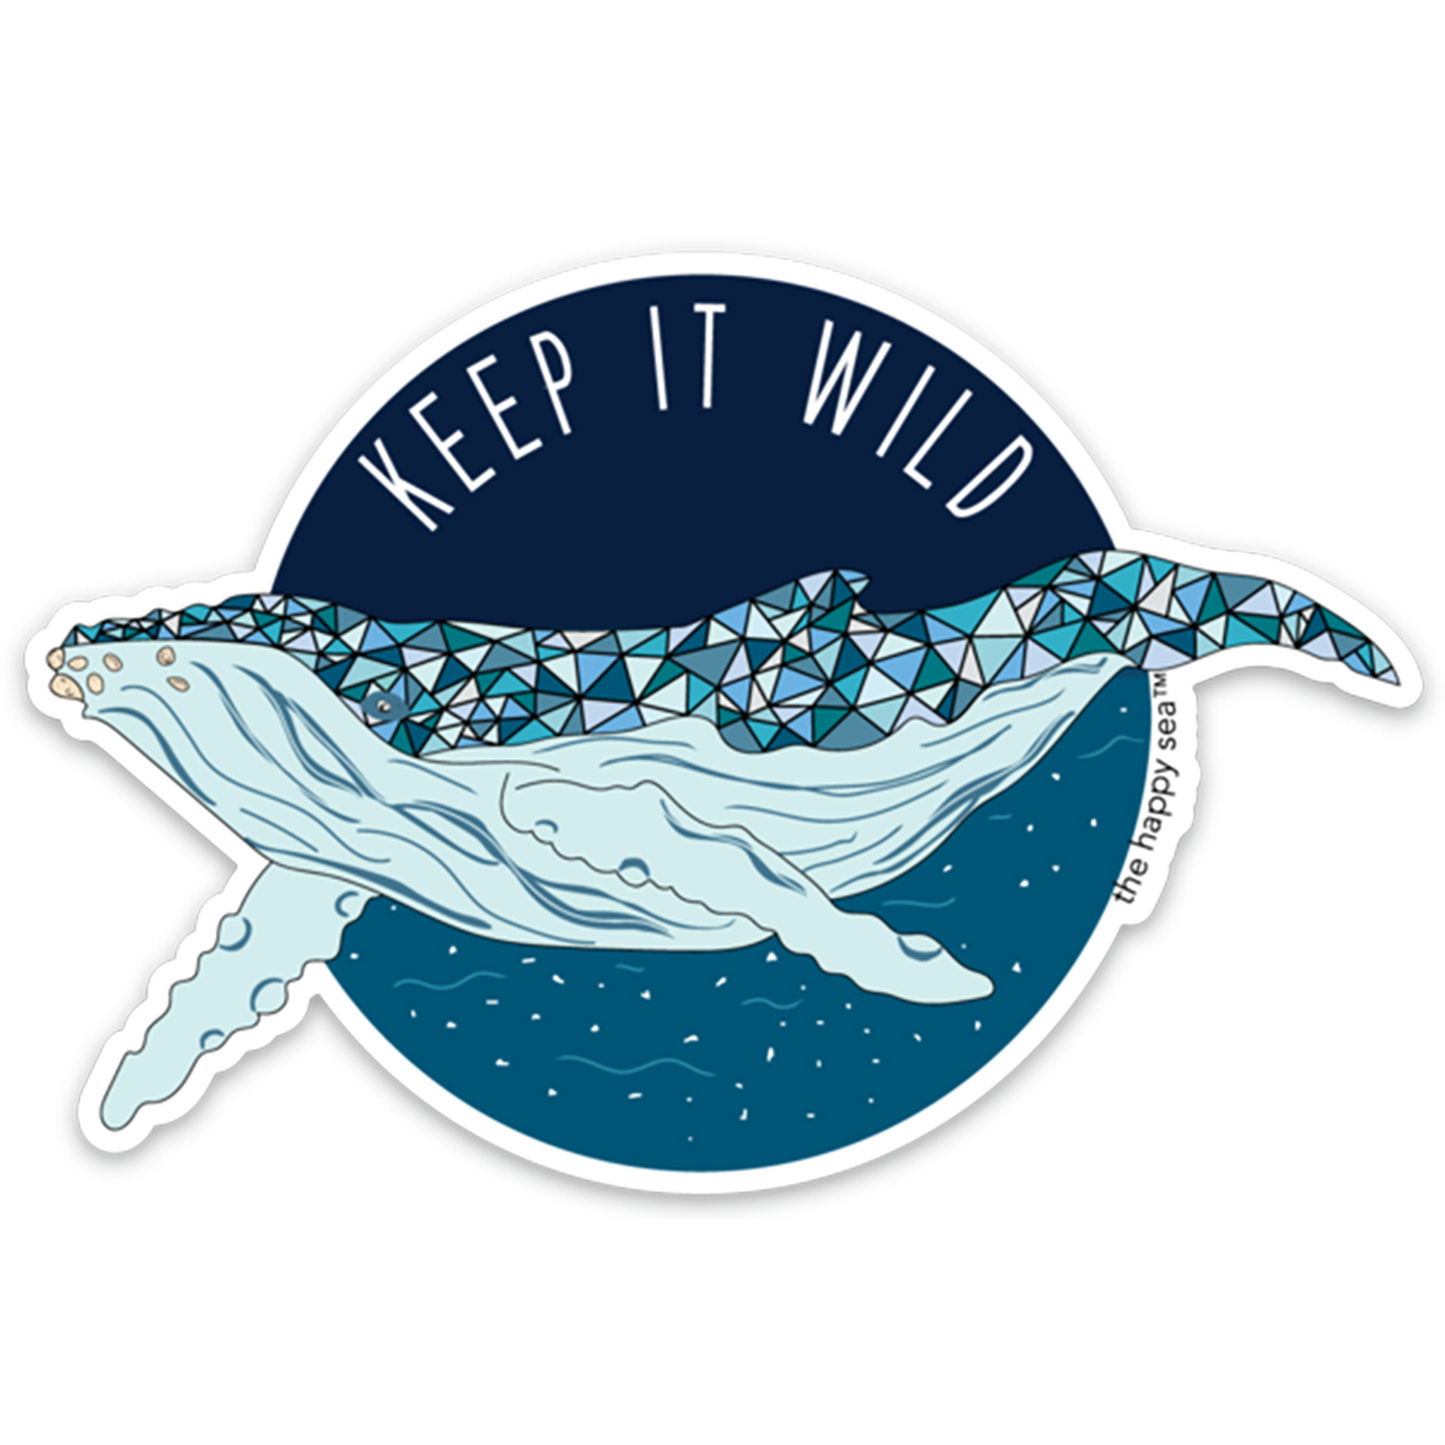 The Happy Sea 4" Keep It Wild Sticker